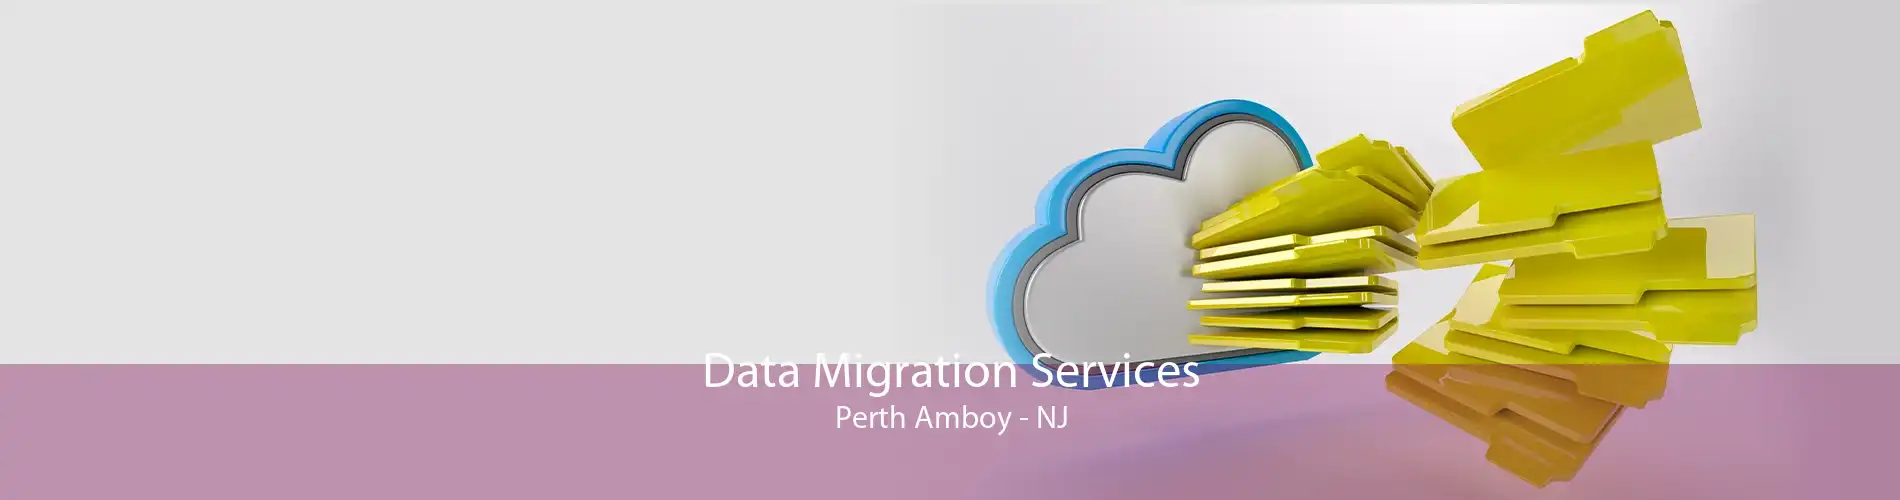 Data Migration Services Perth Amboy - NJ